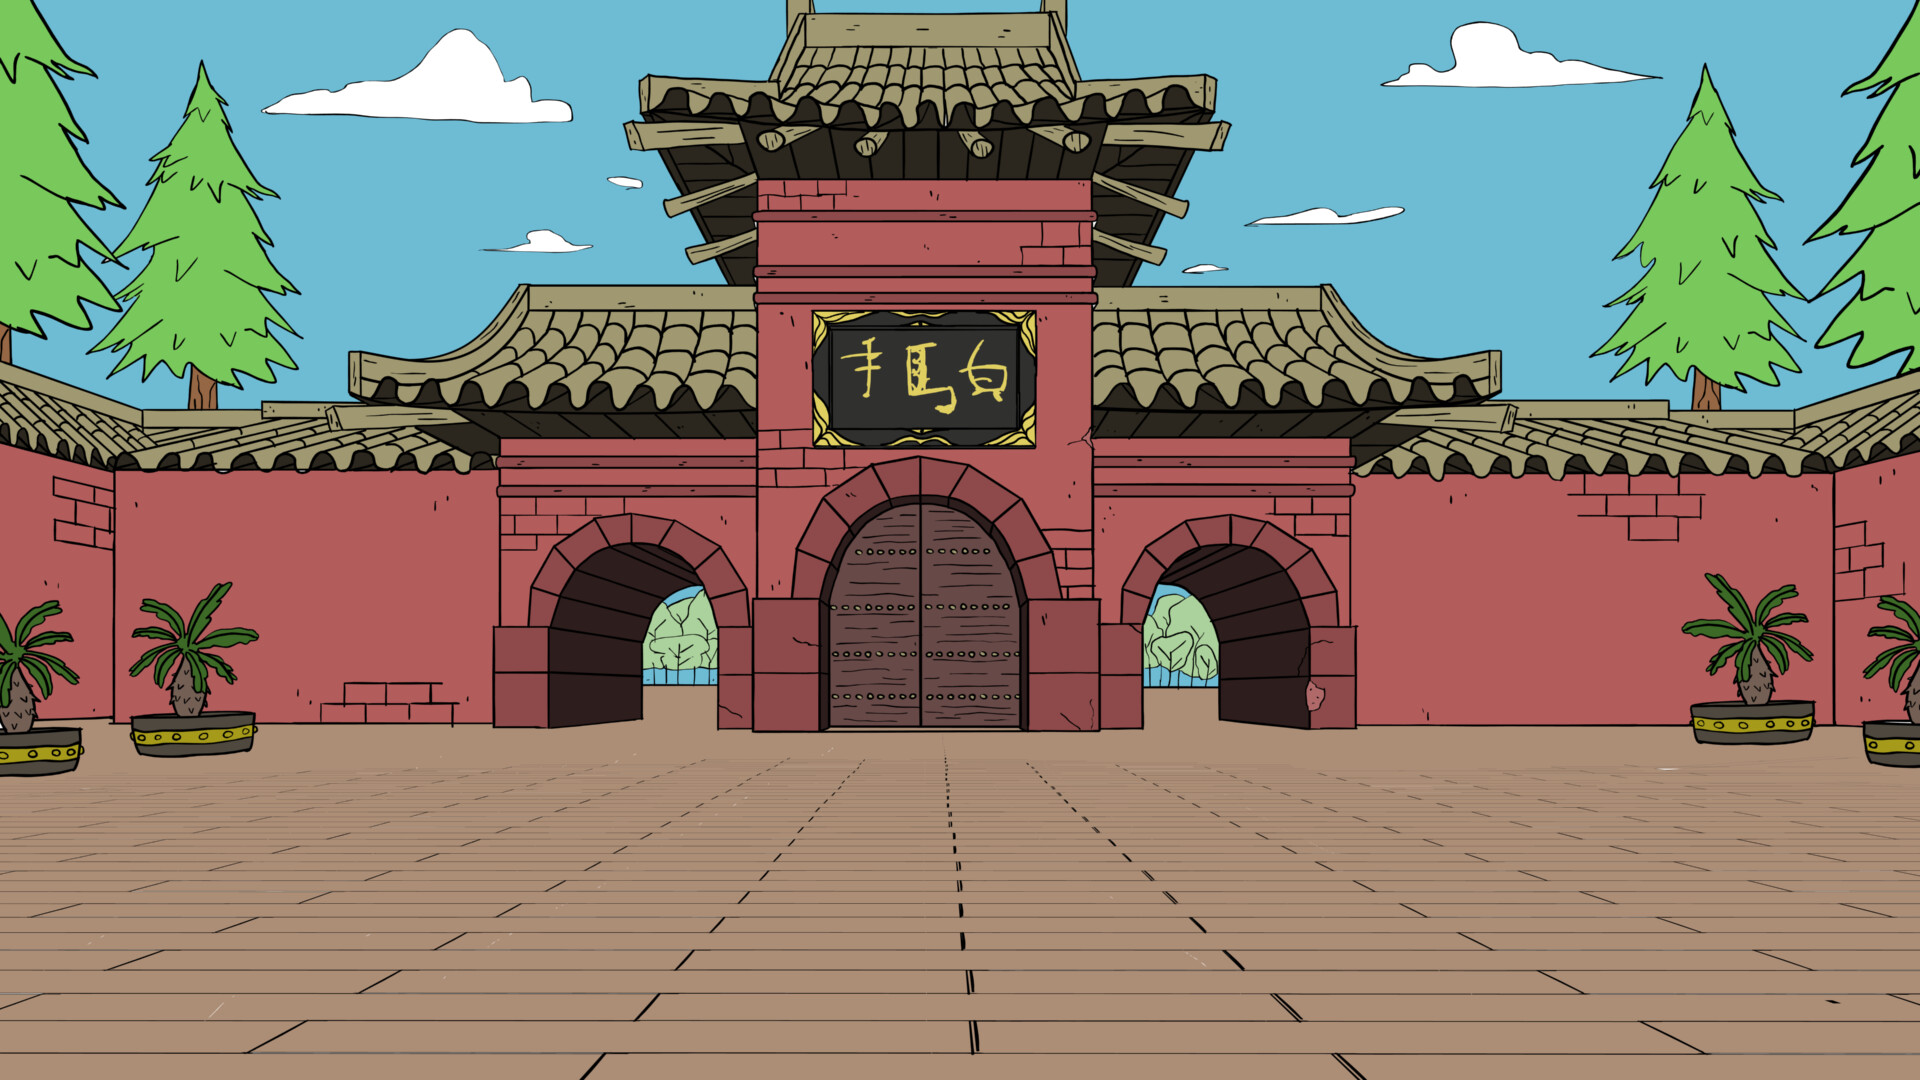 ArtStation - Cartoon chinese temple (background)